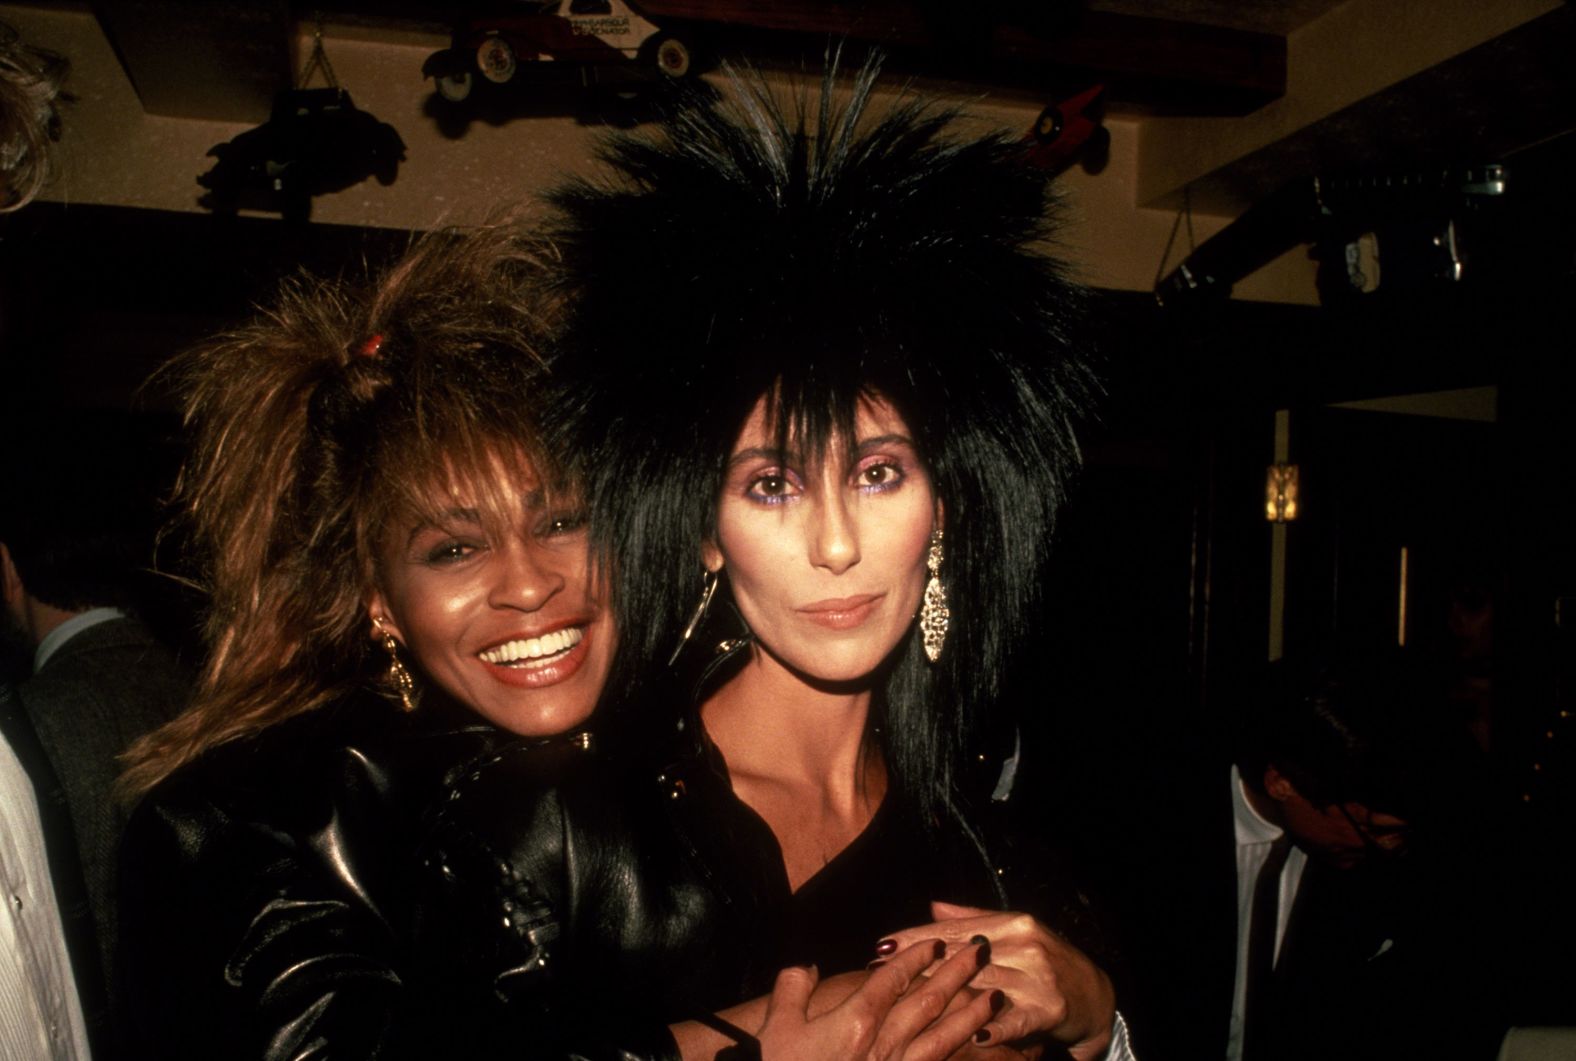 Turner and Cher circa 1985.